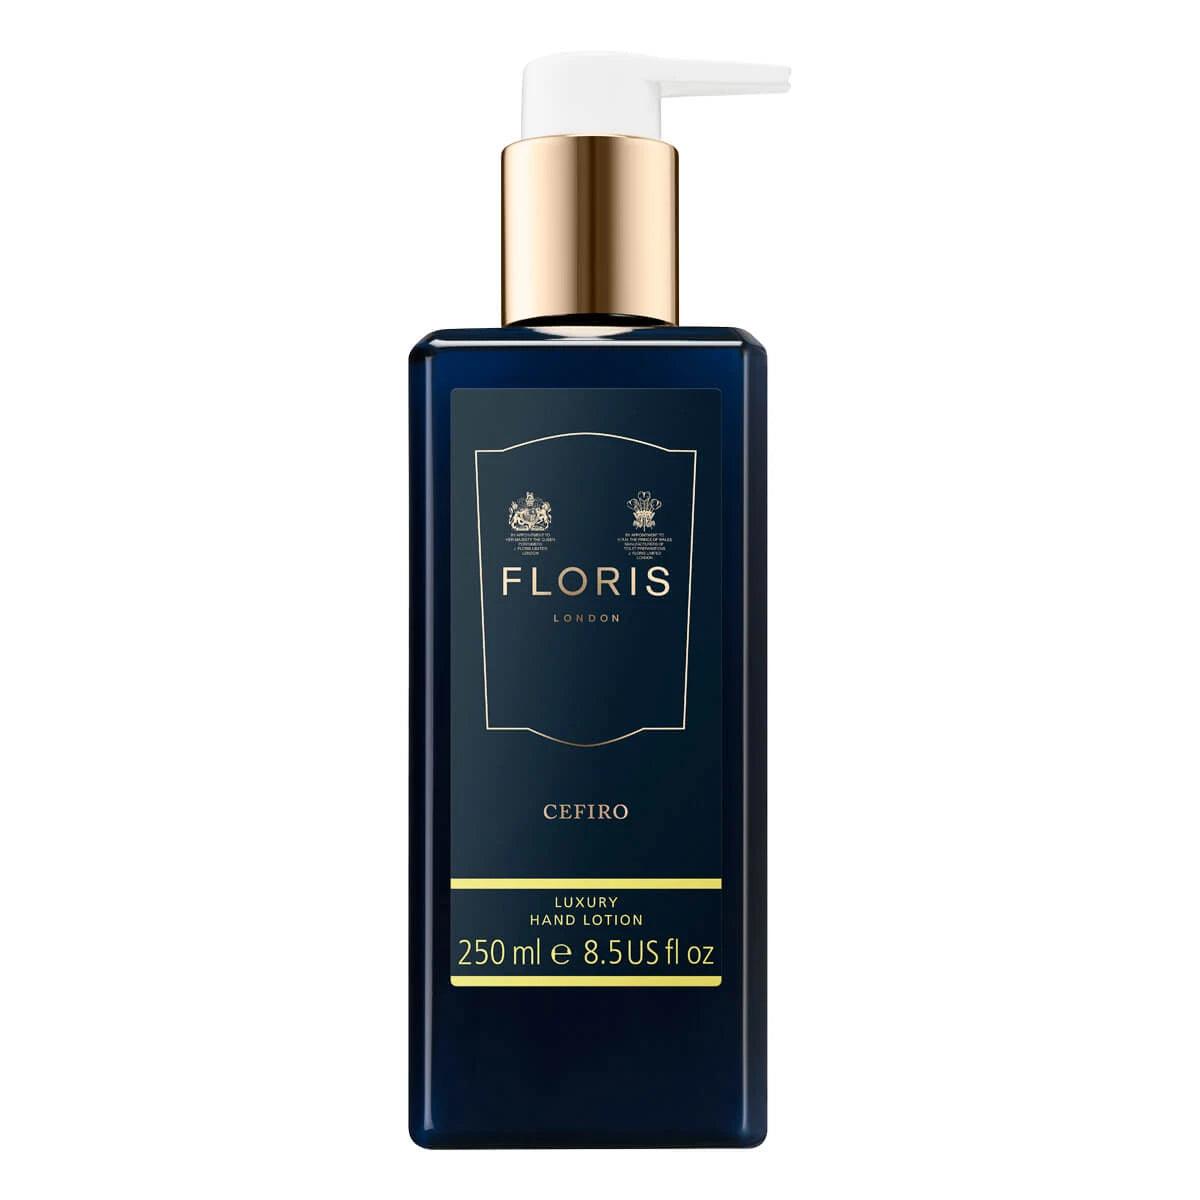 Floris Cefiro, Luxurious Handlotion | Håndkrem | Floris London | JK SHOP | JK Barber og herre frisør | Lavepriser | Best